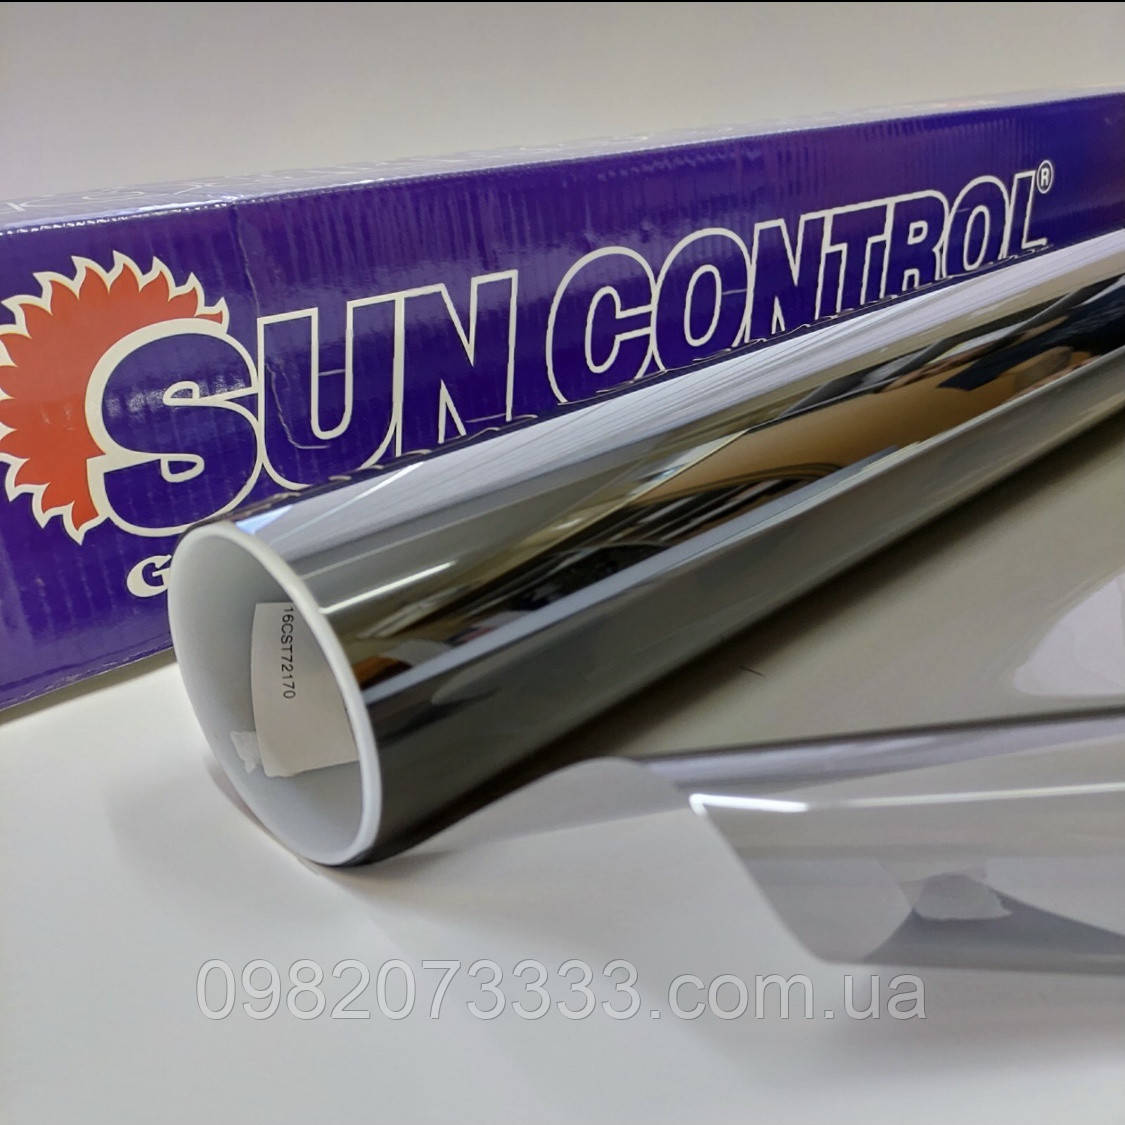 Тонировочная пленка HP LR CH 35 Sun Control для стекол авто ширина рулона 1,524м (цена за кв.м)